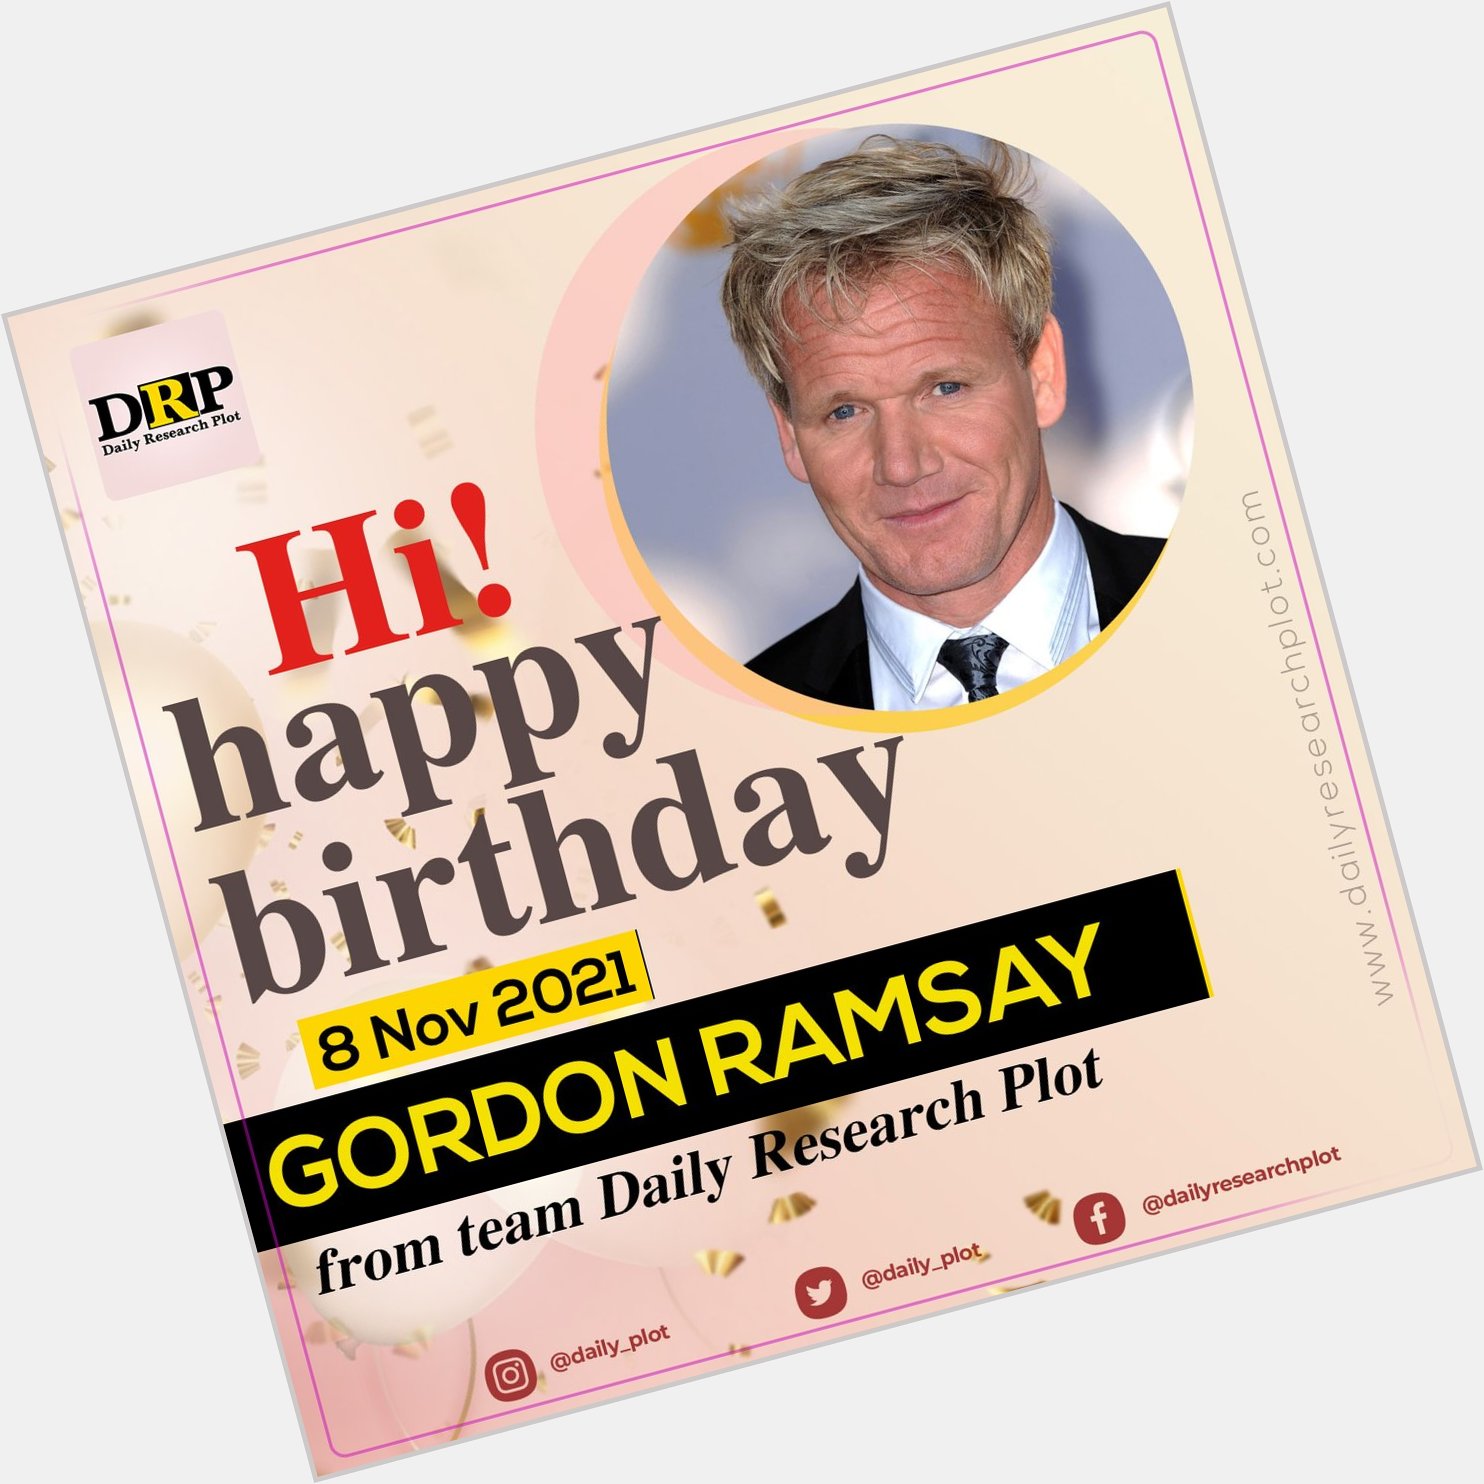 Happy Birthday!
Gordon Ramsay   